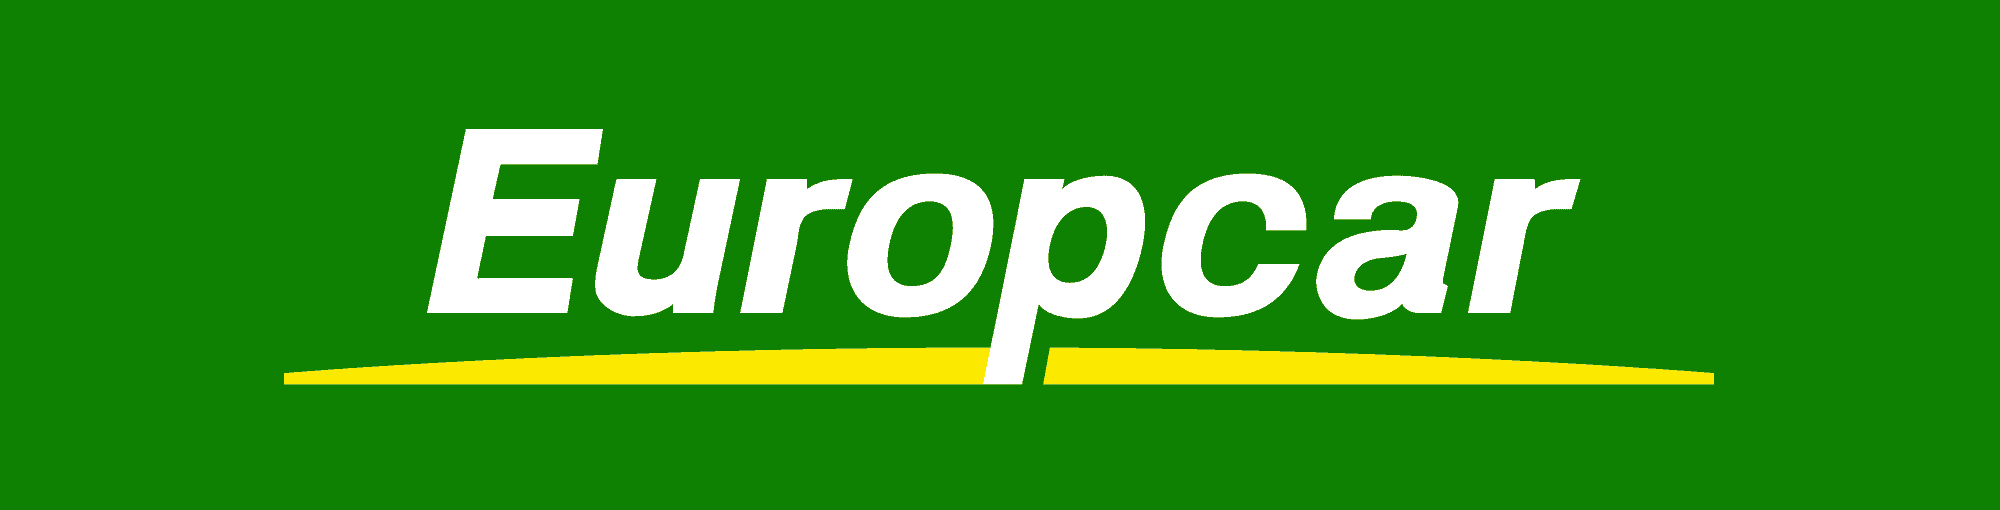 Alles over Europcar